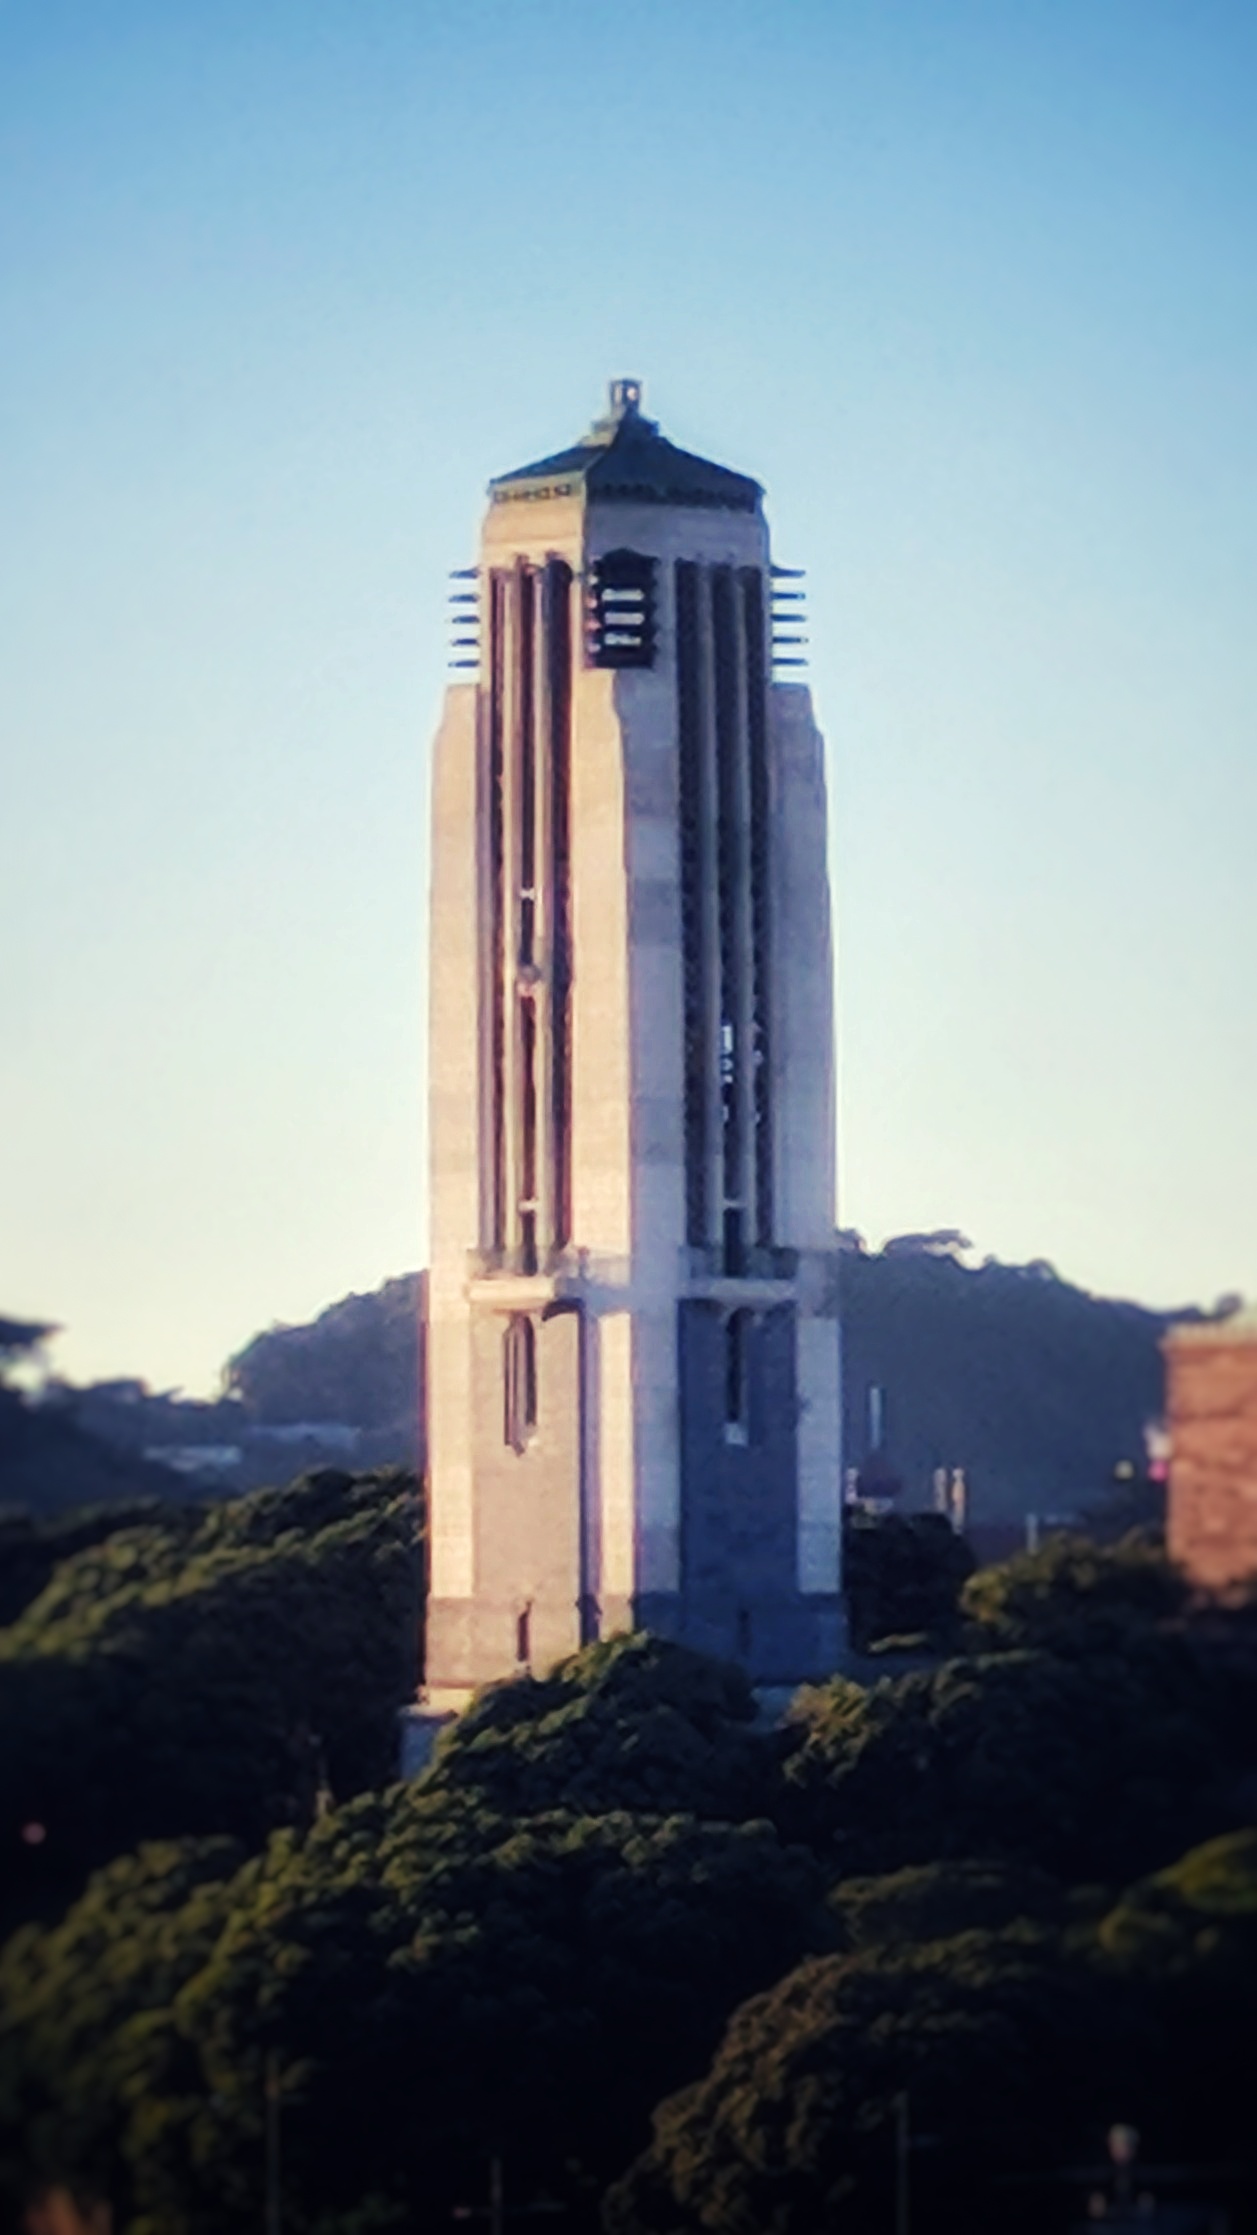 The Carillon in Wellington, AoNZ